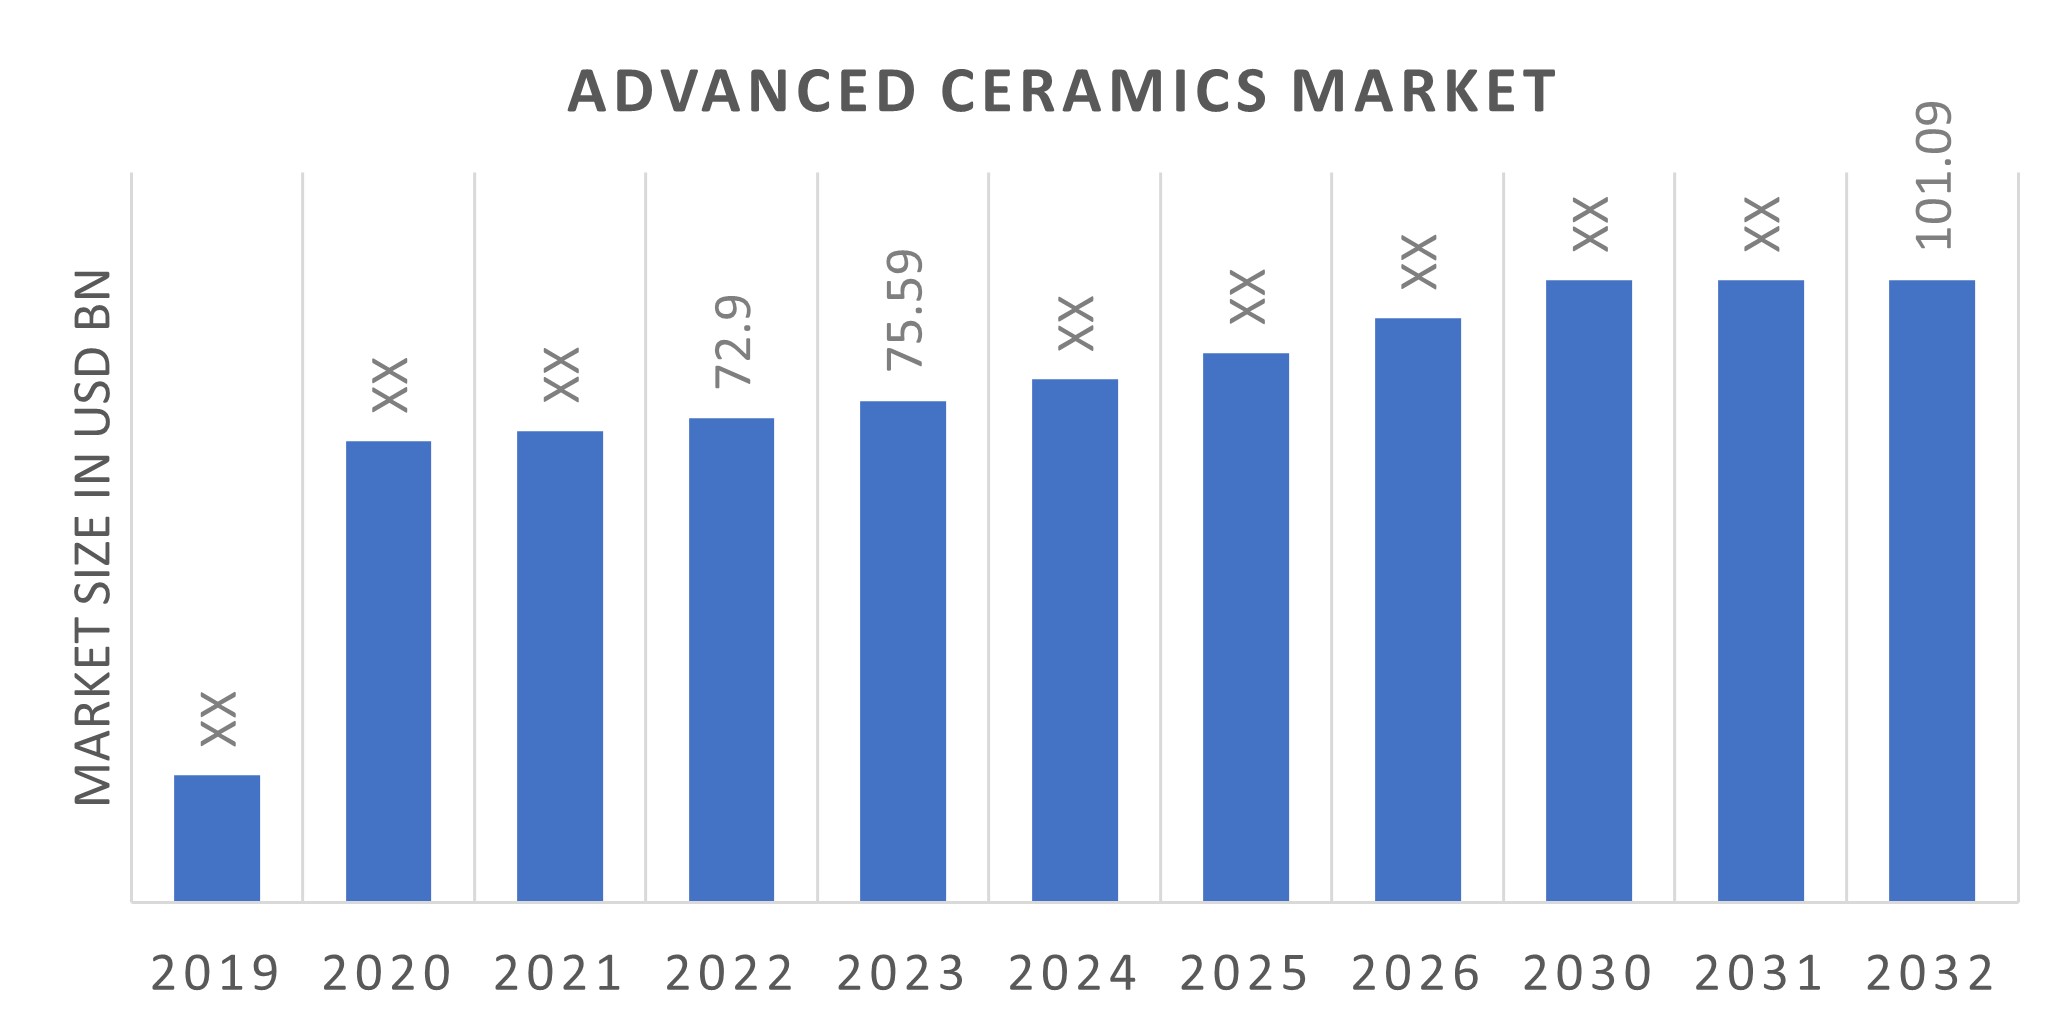 Global Advanced Ceramics Market